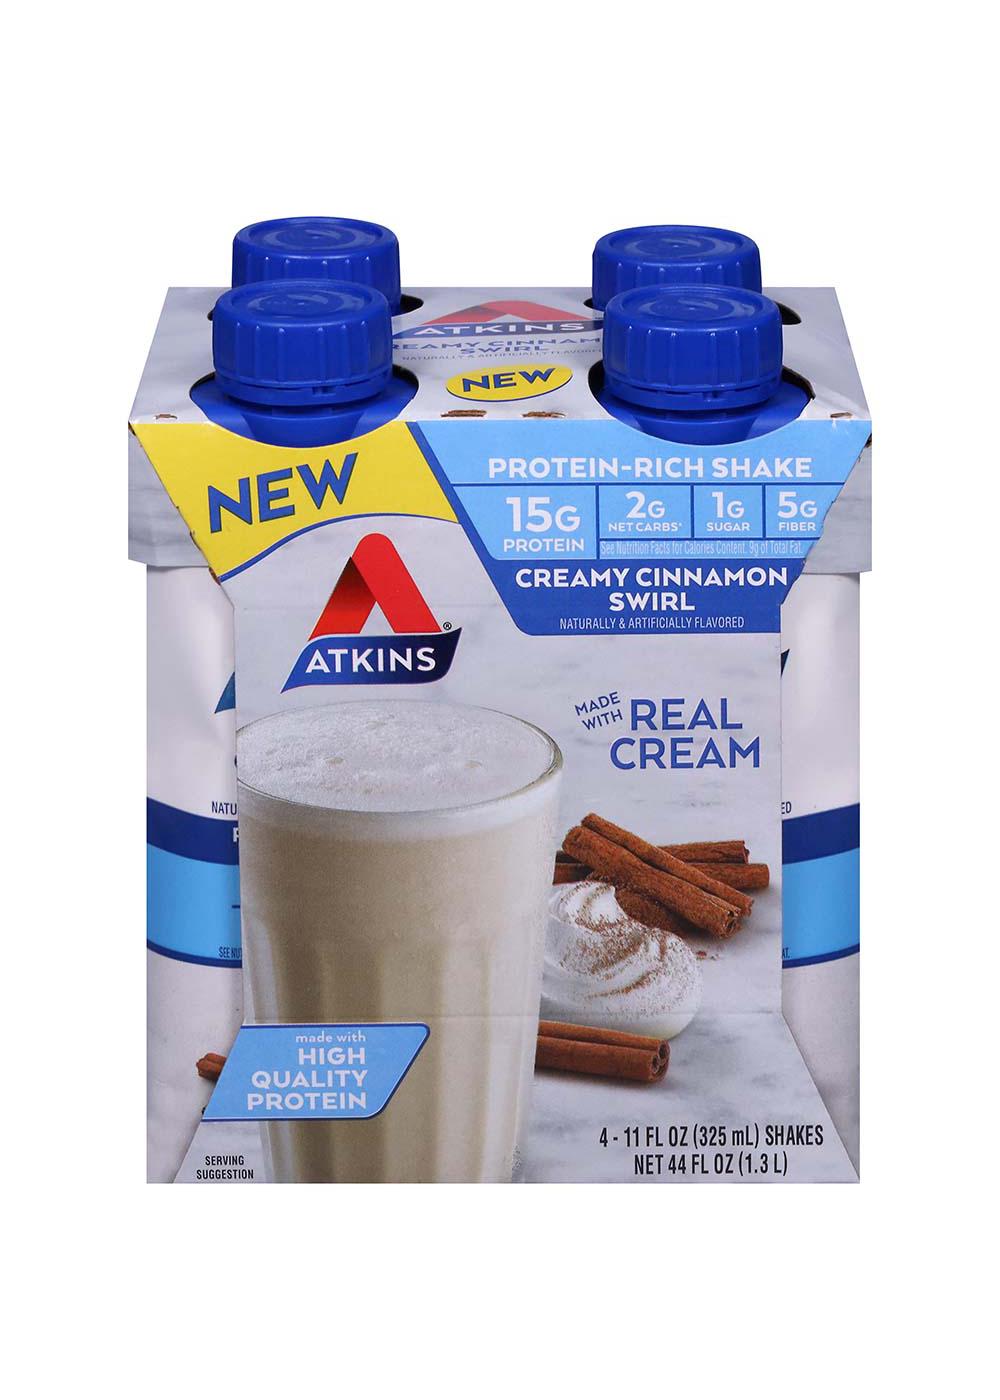 Atkins Protein-Rich Shake - Creamy Cinnamon Swirl; image 1 of 2